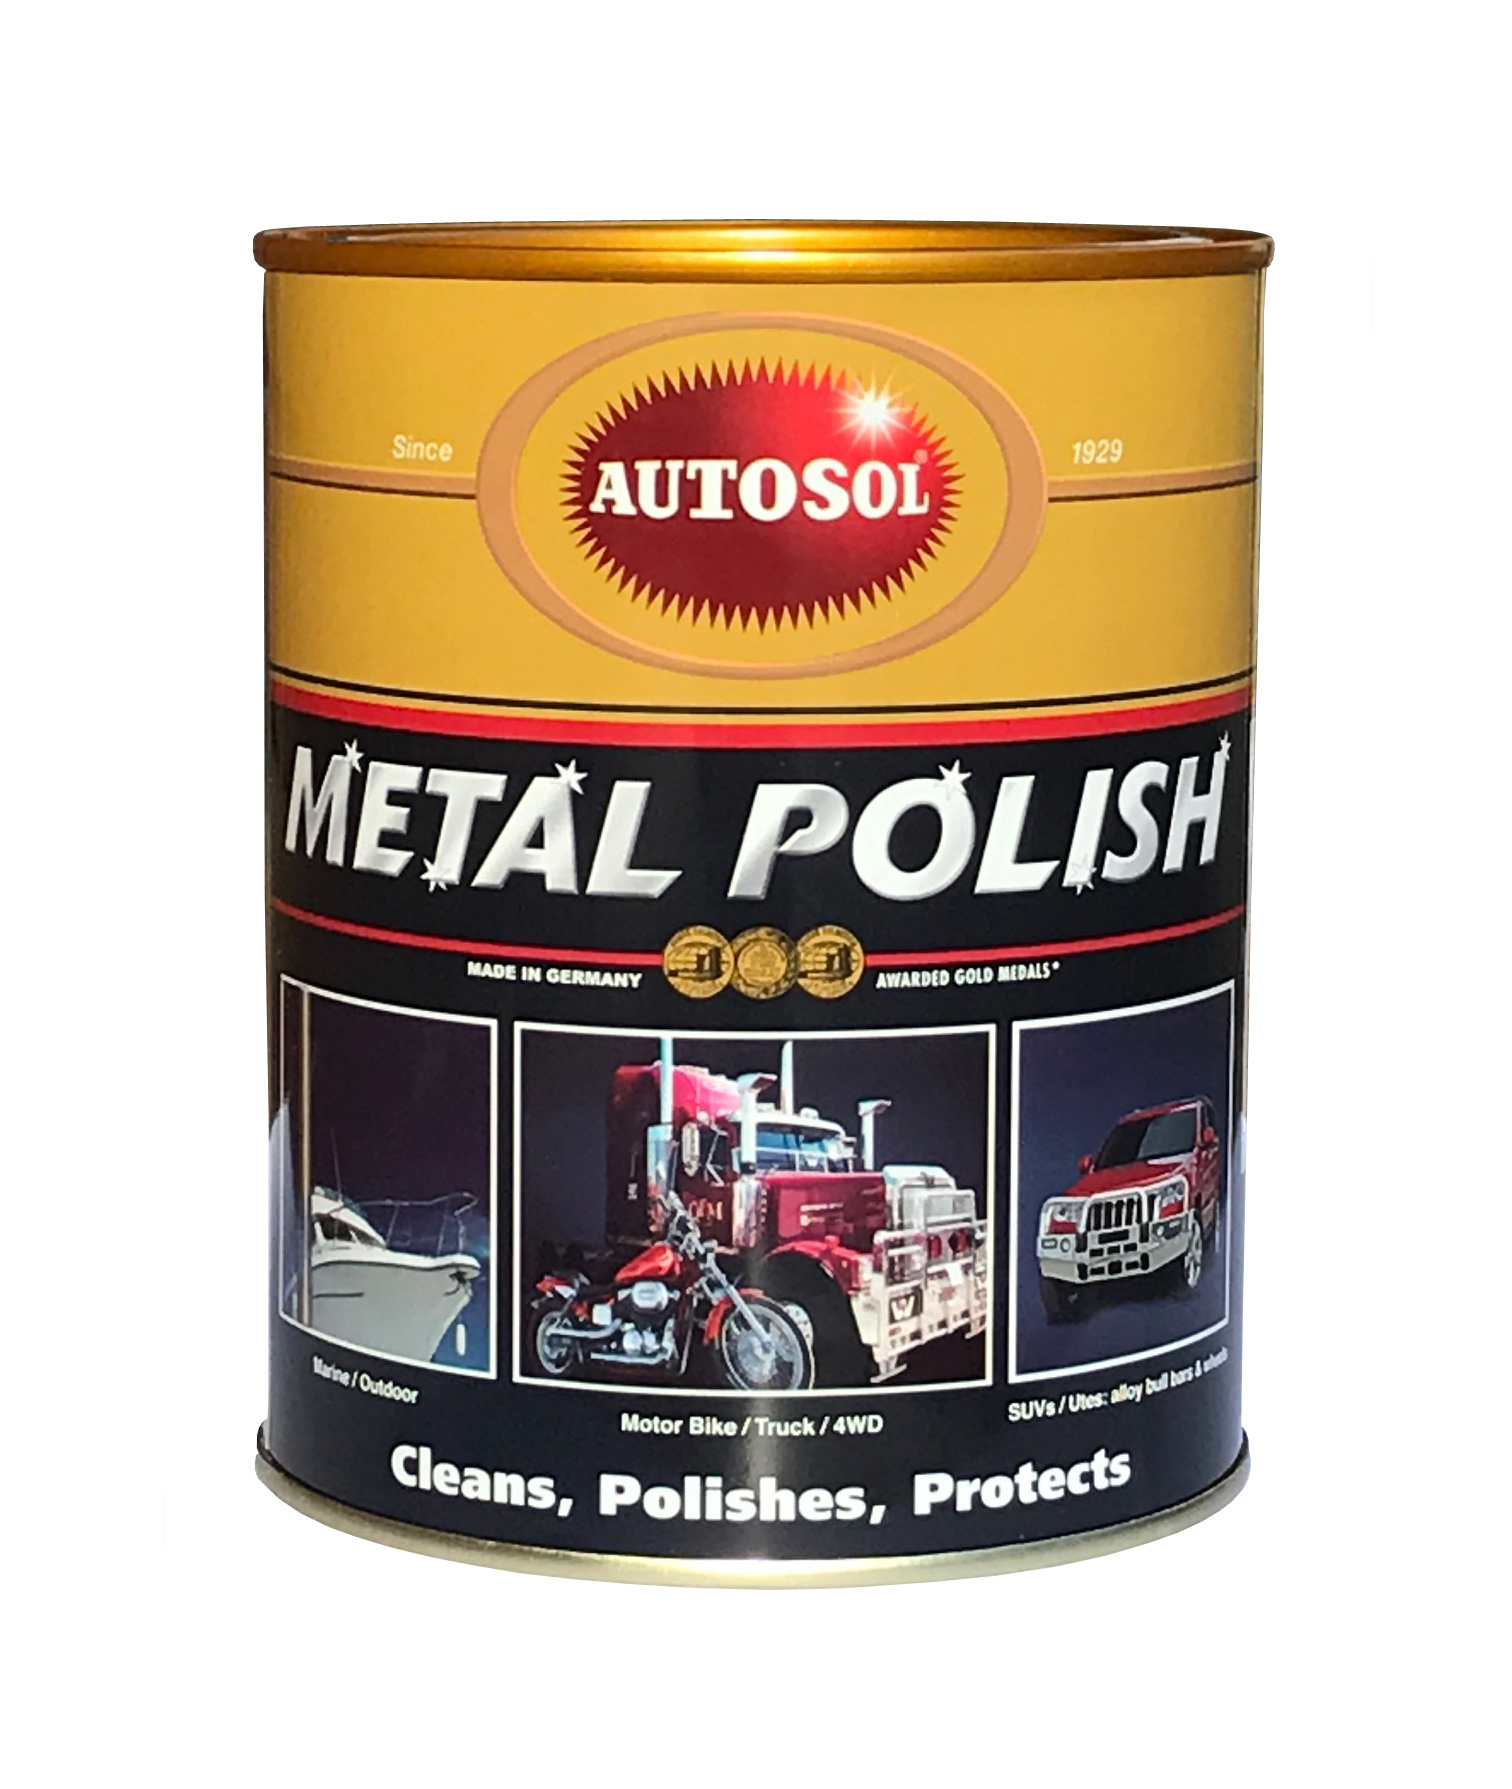 Metal Polish 1kg - Best metal polish in the market, since 1929!